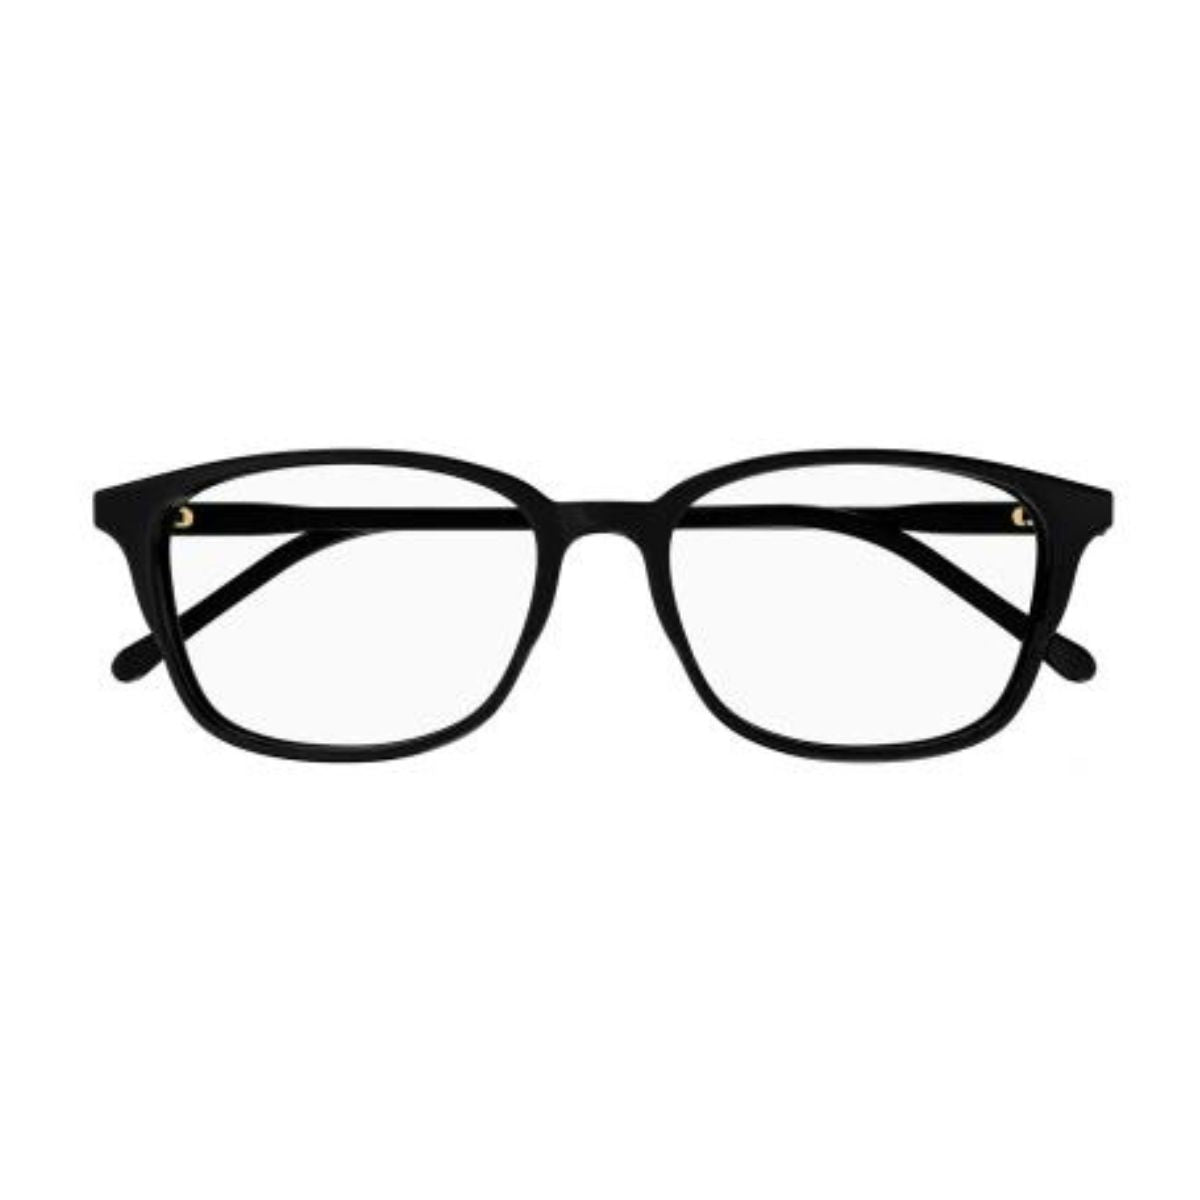 "Gucci GG1610OA 001 prescription eyeglasses frame for men's online at optorium"